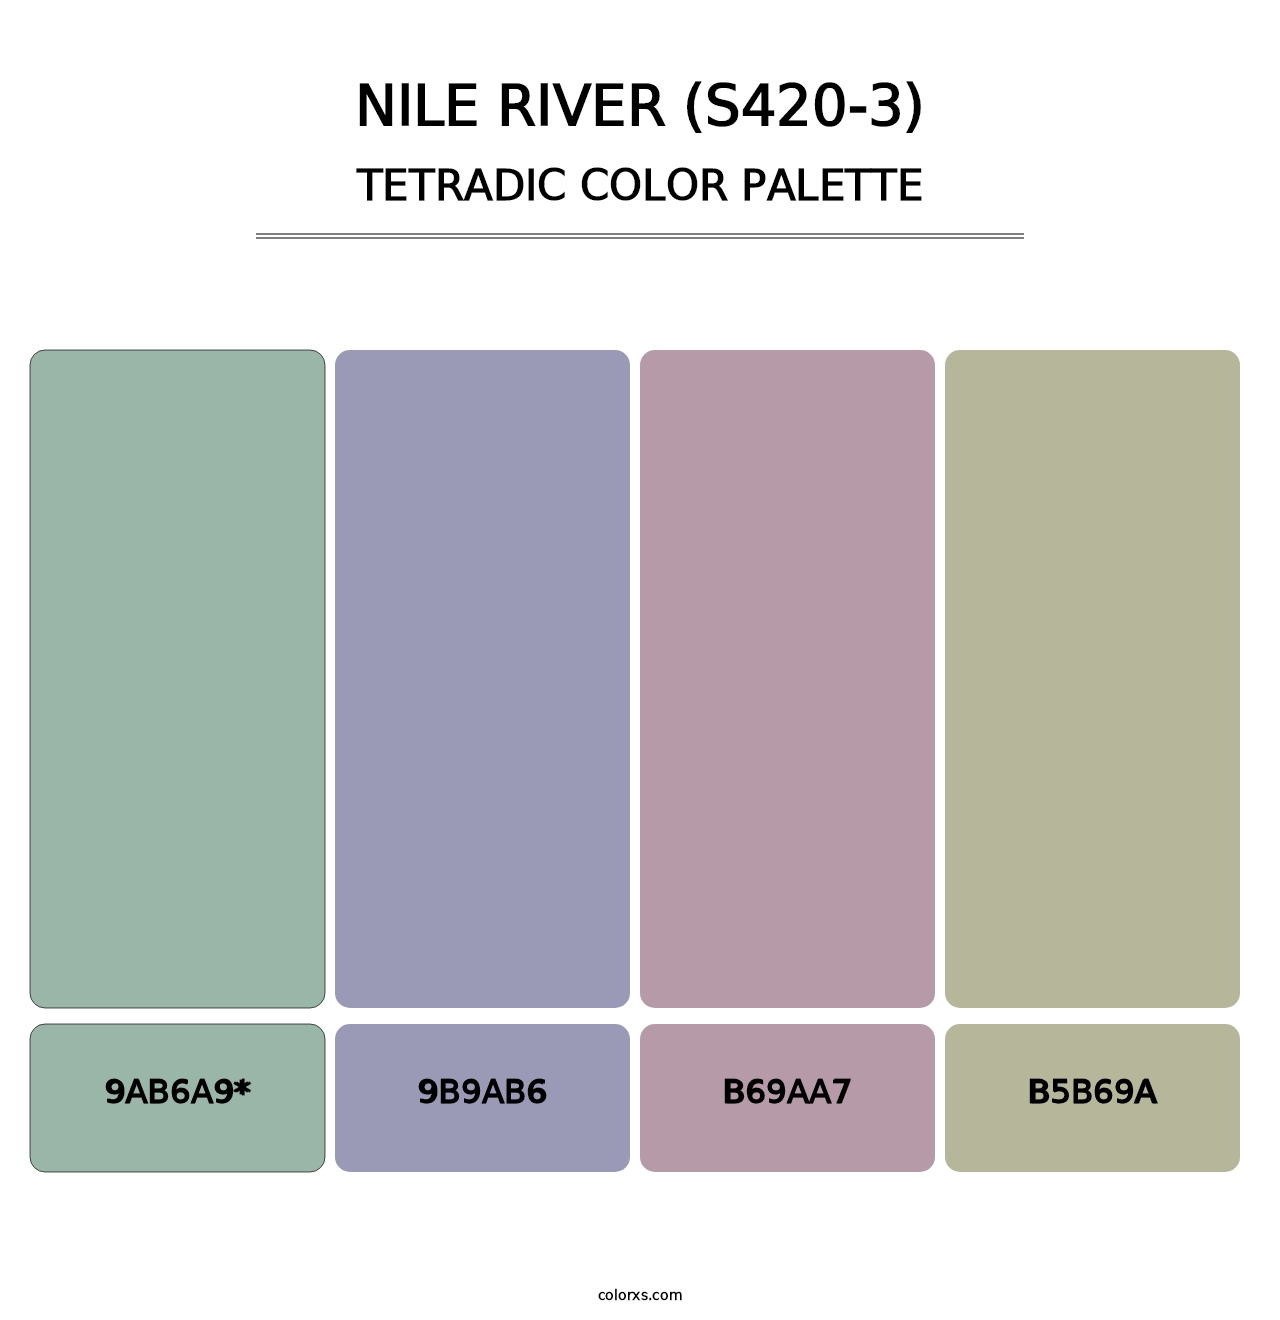 Nile River (S420-3) - Tetradic Color Palette